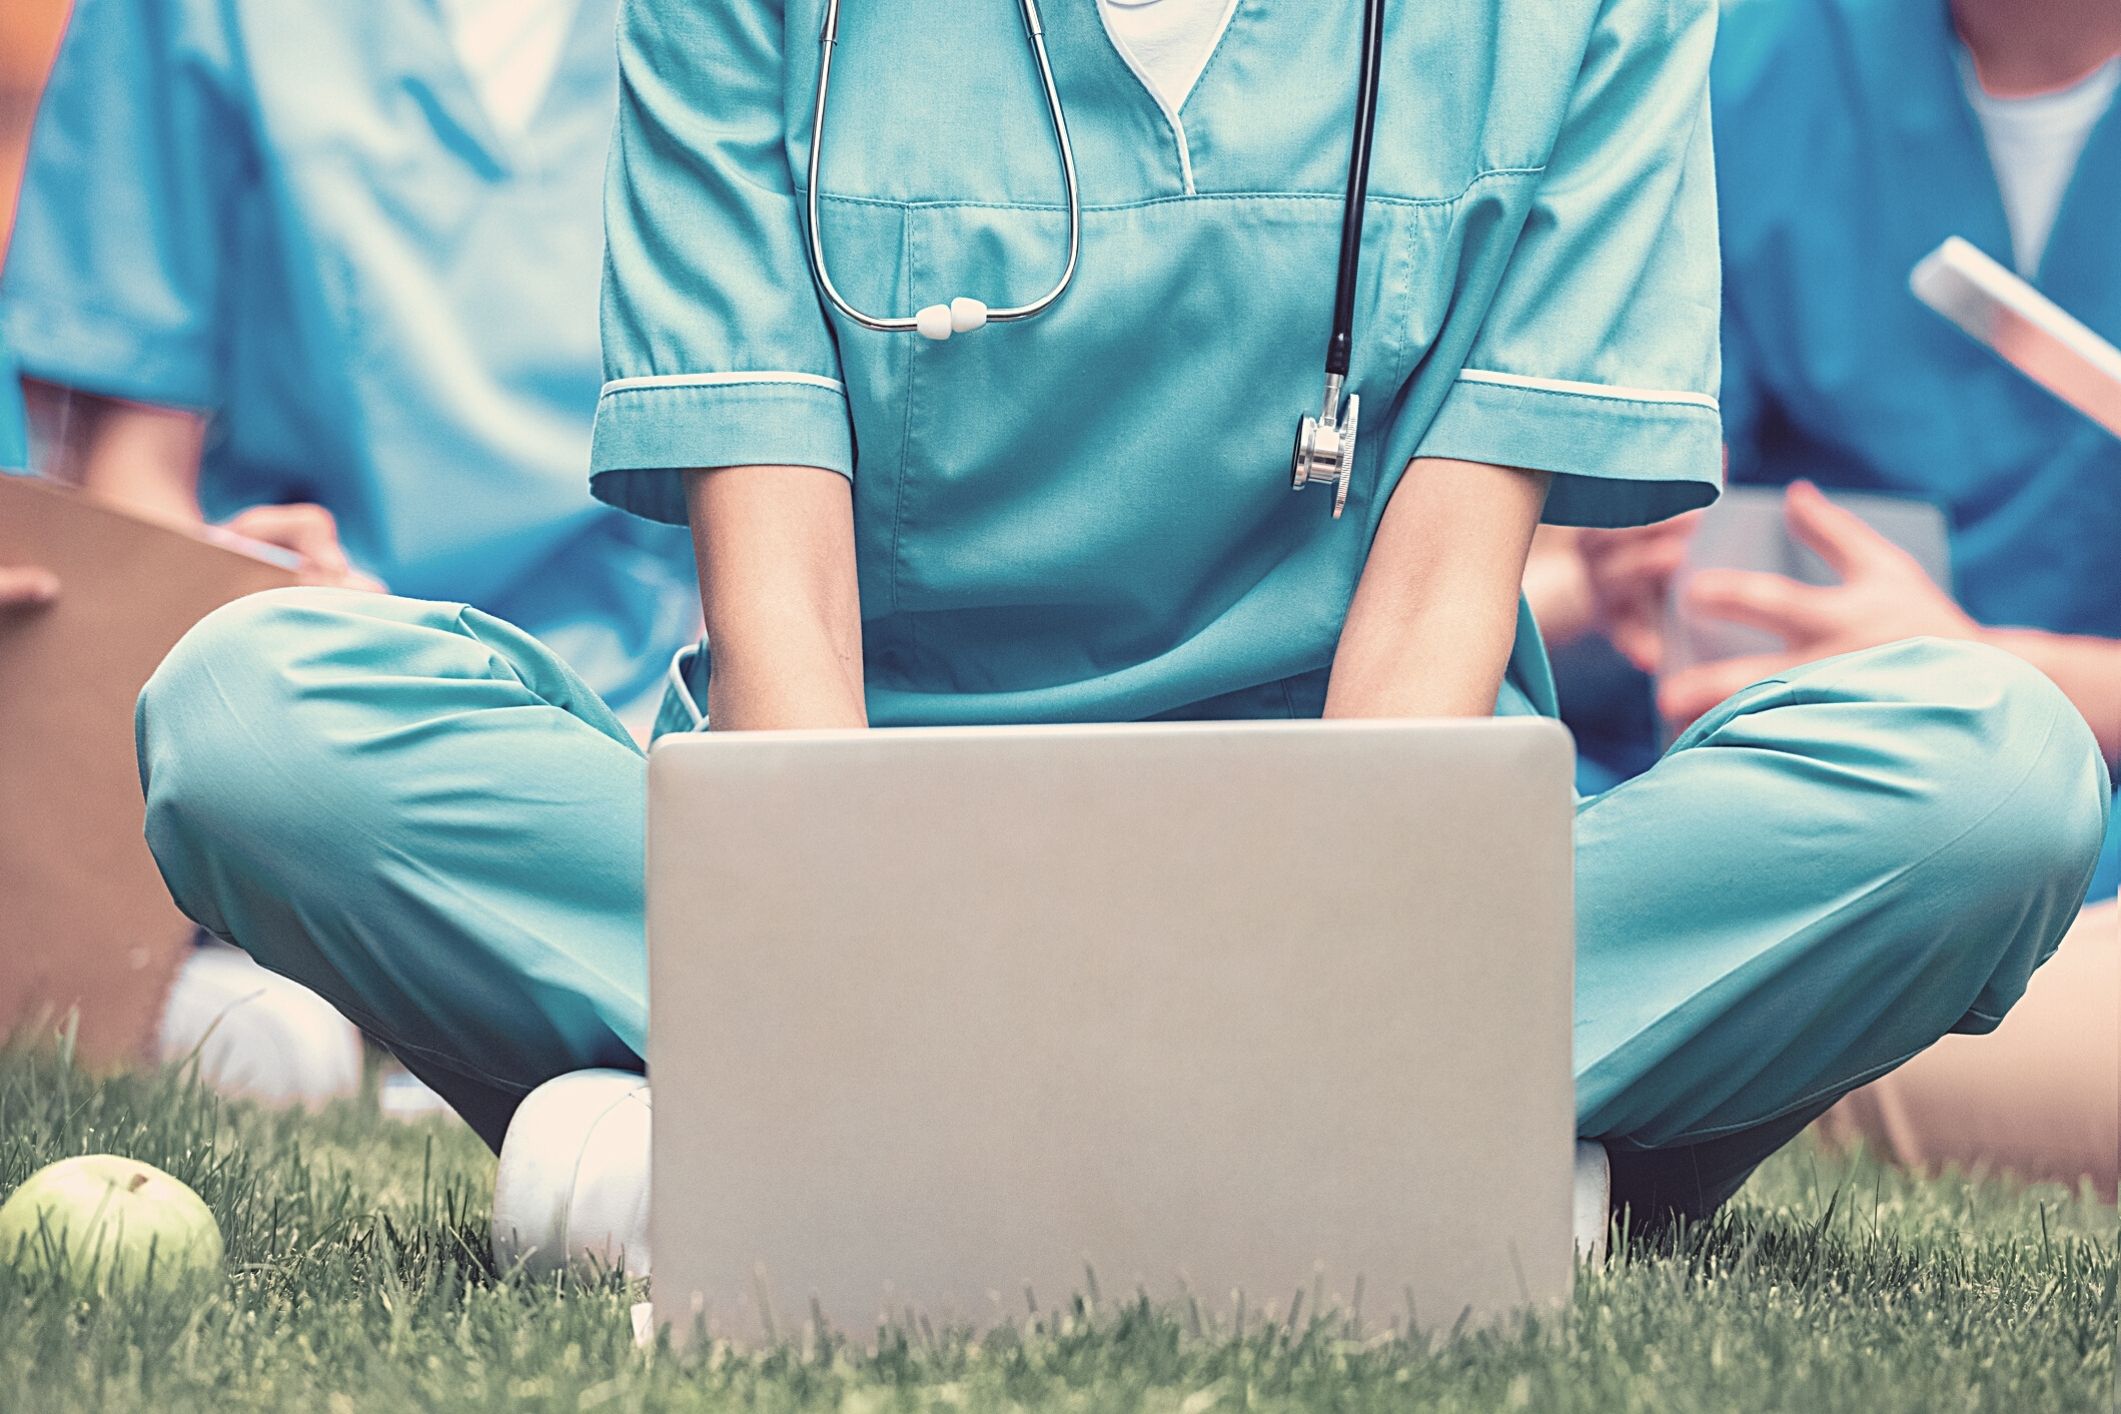 Nurse education training laptop